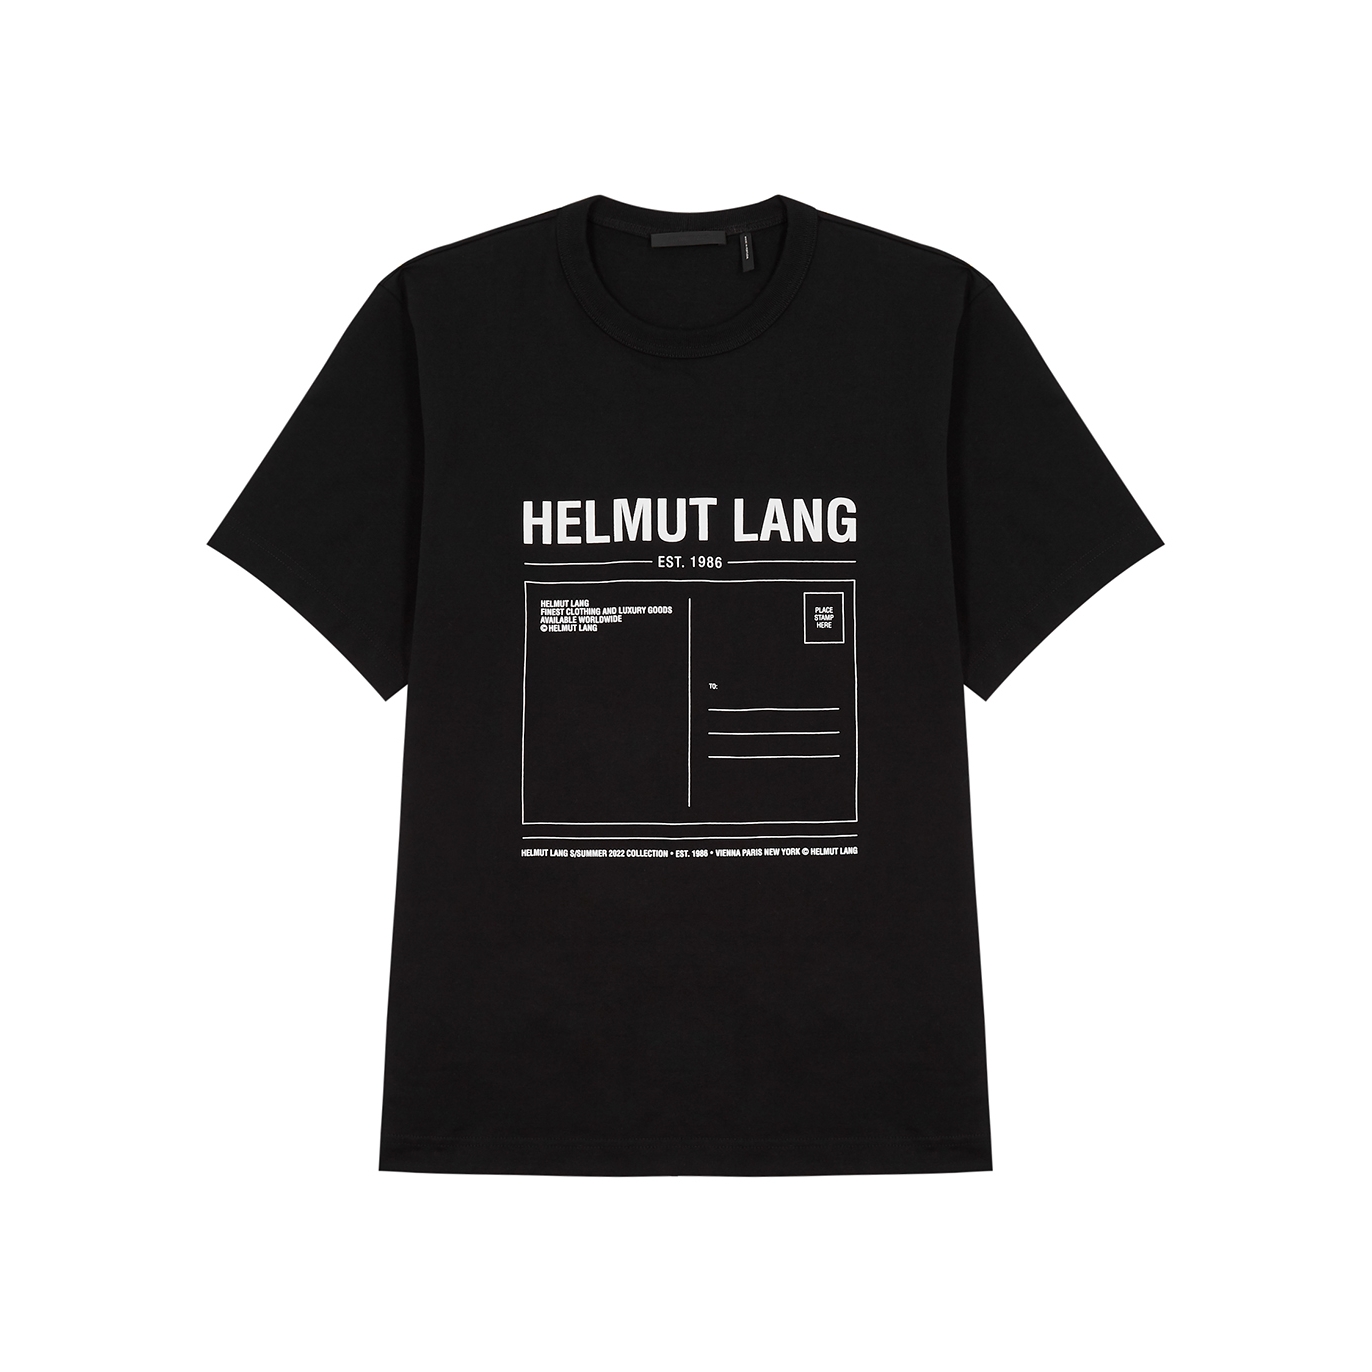 Helmut Lang X Kyungjun Lee New York Black Jersey T-shirt - XL